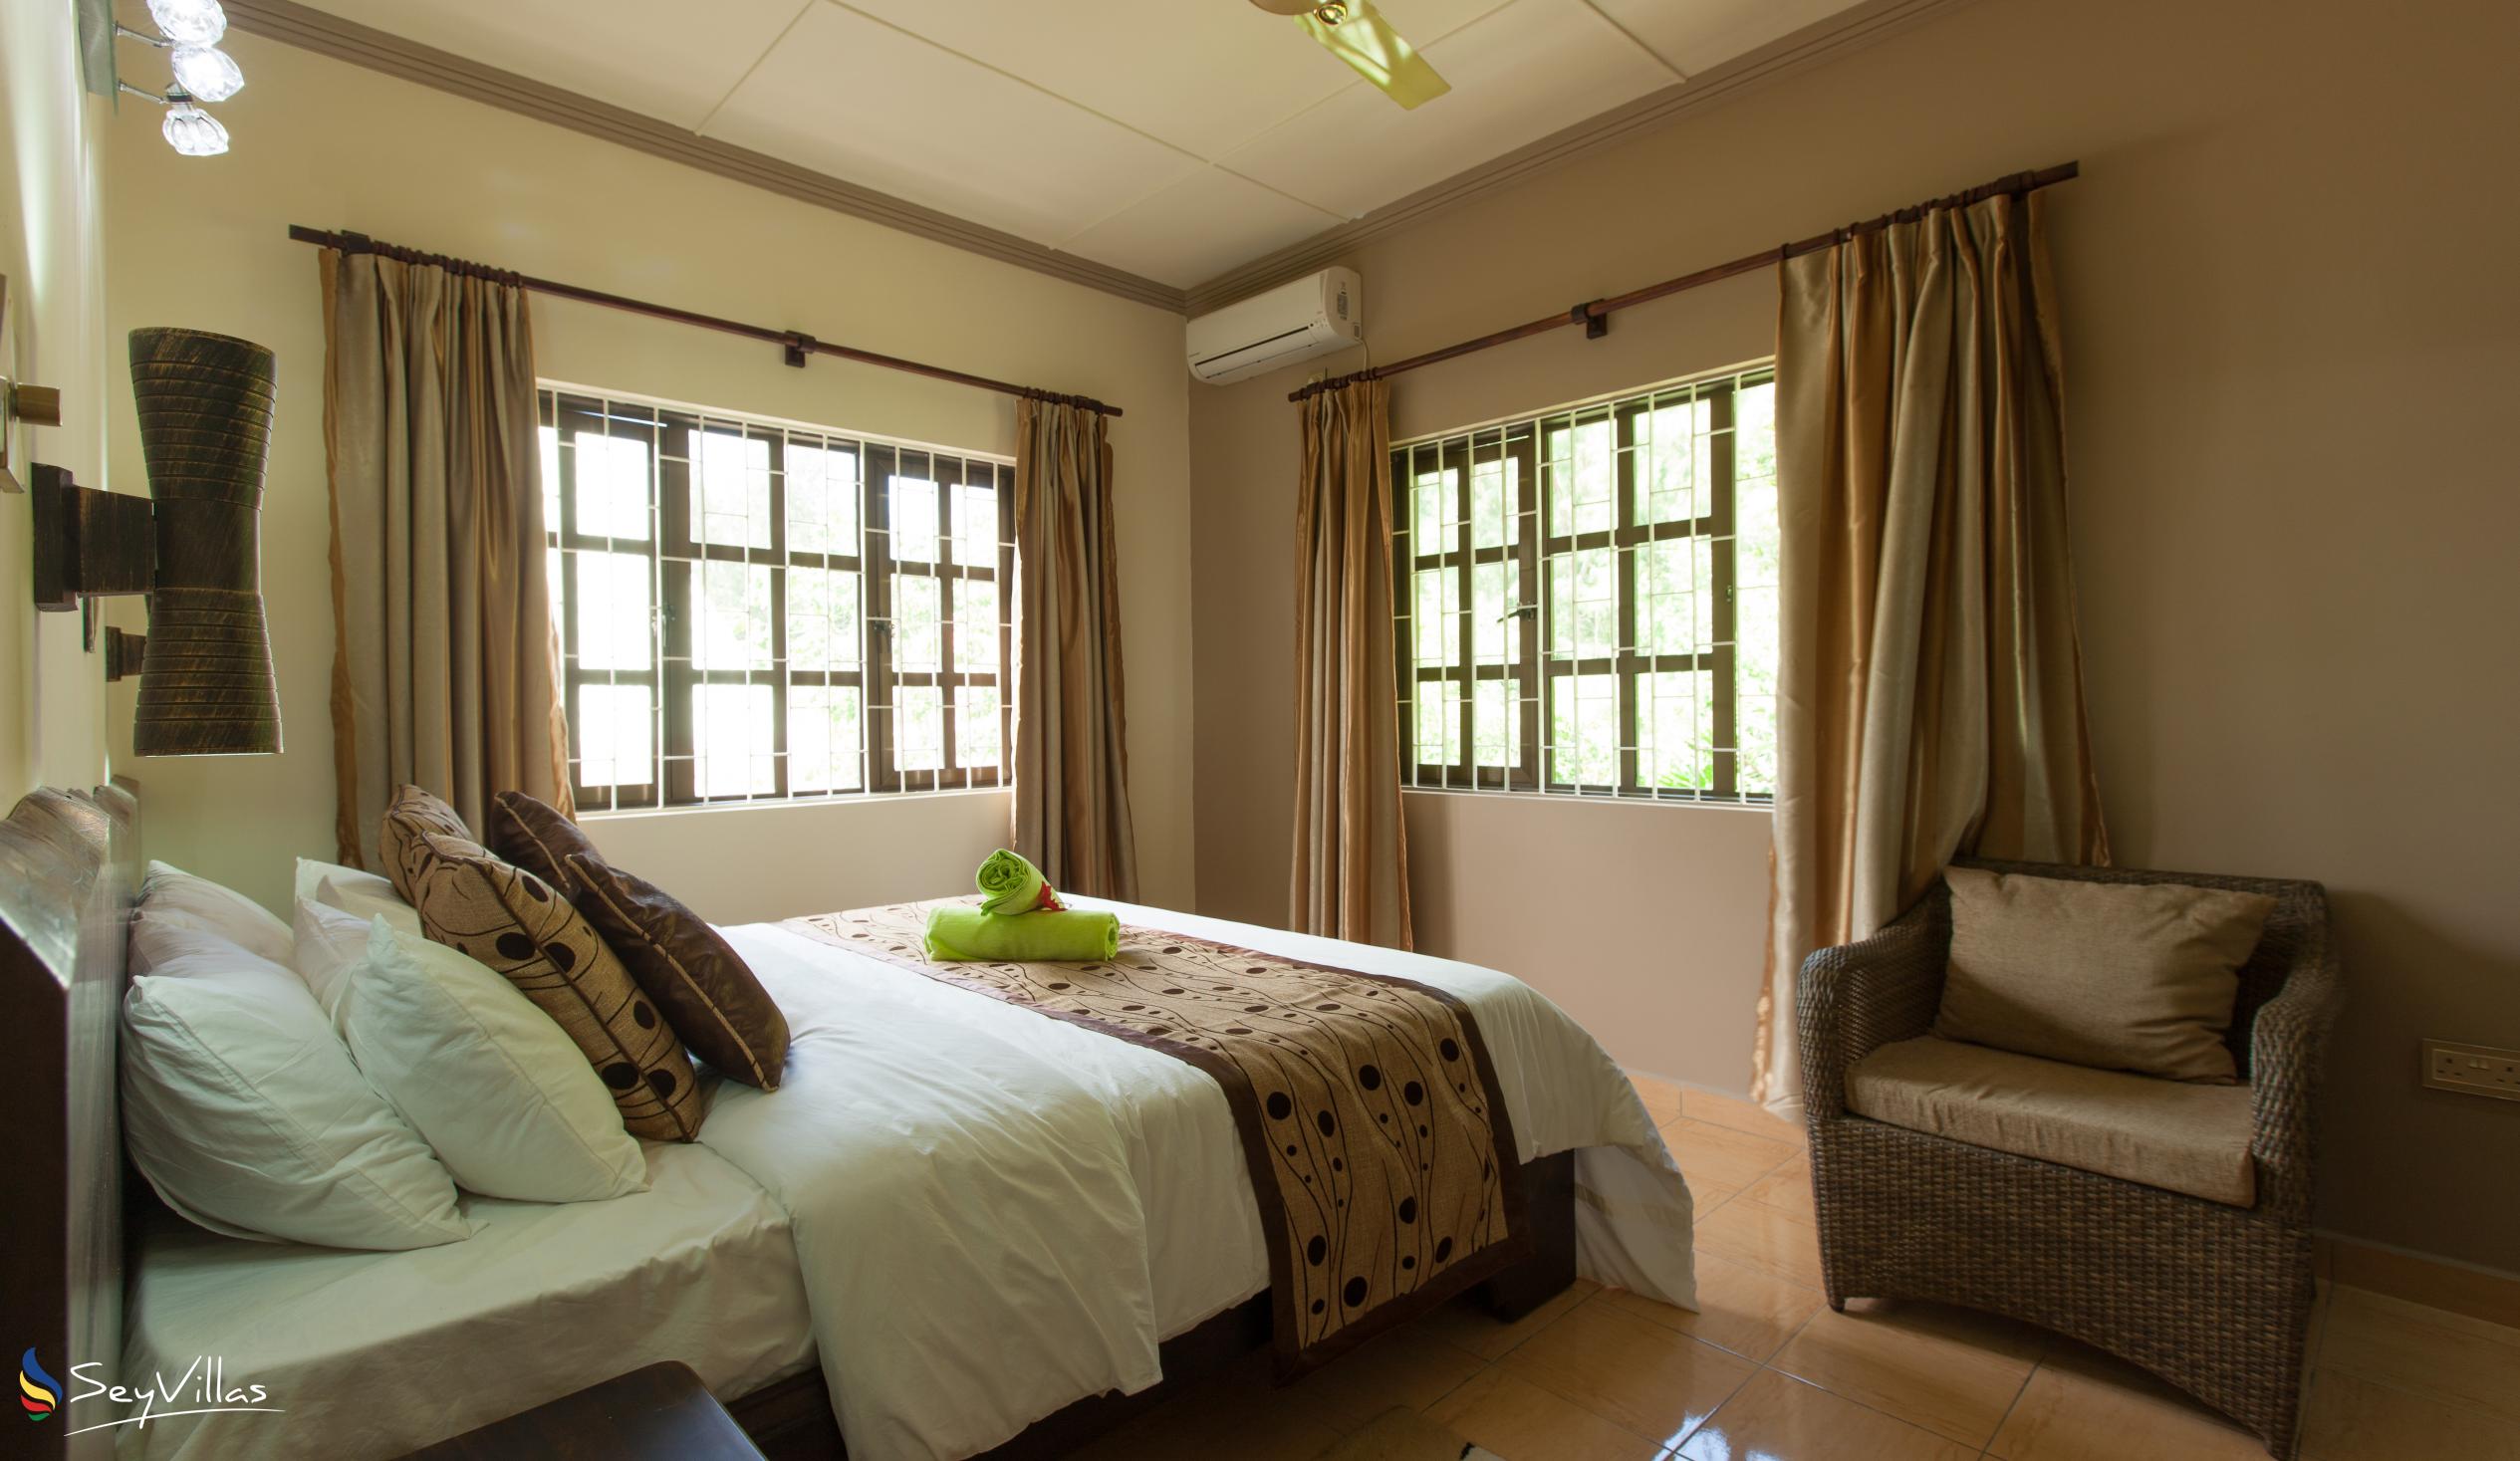 Foto 110: Chez Bea Villa - Appartement 1 chambre - Praslin (Seychelles)